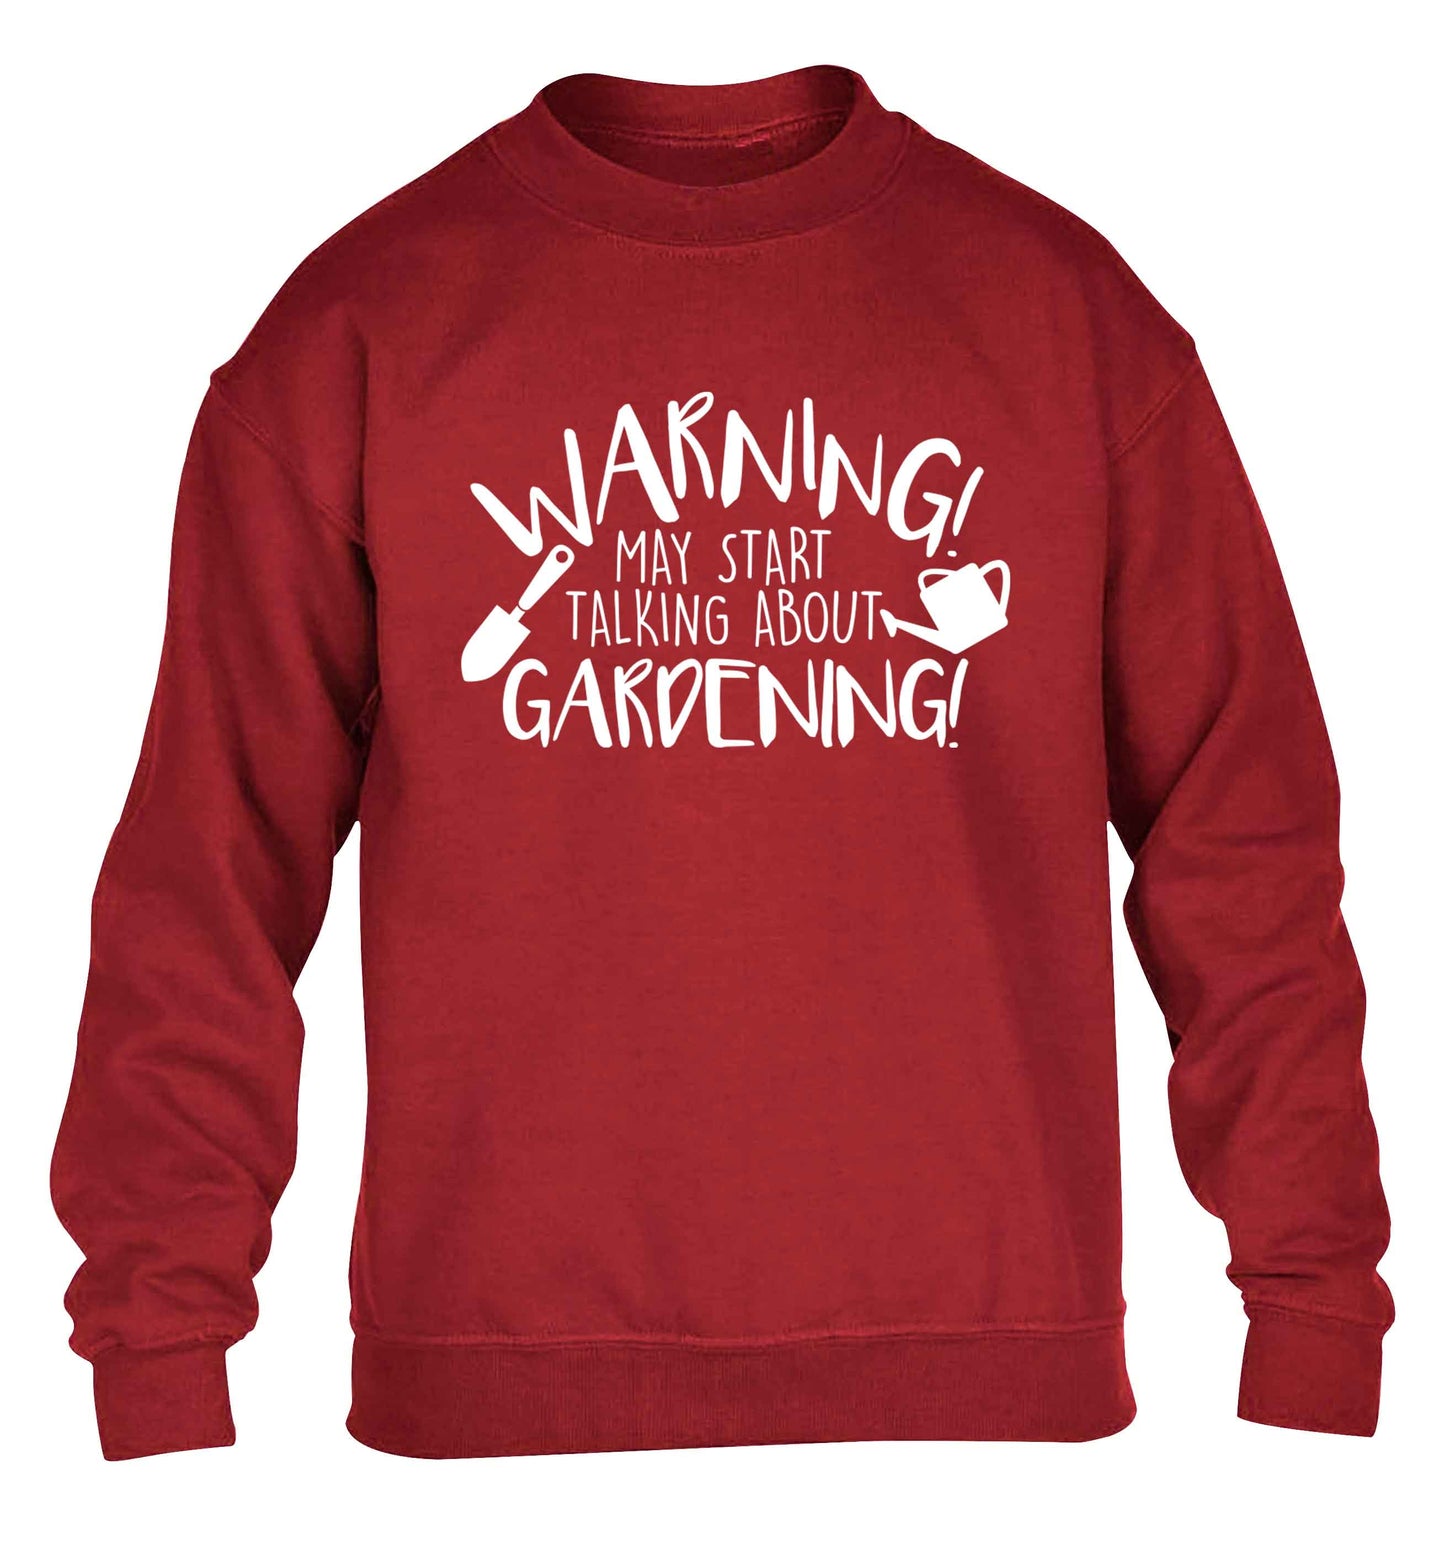 Warning may start talking about gardening children's grey sweater 12-13 Years